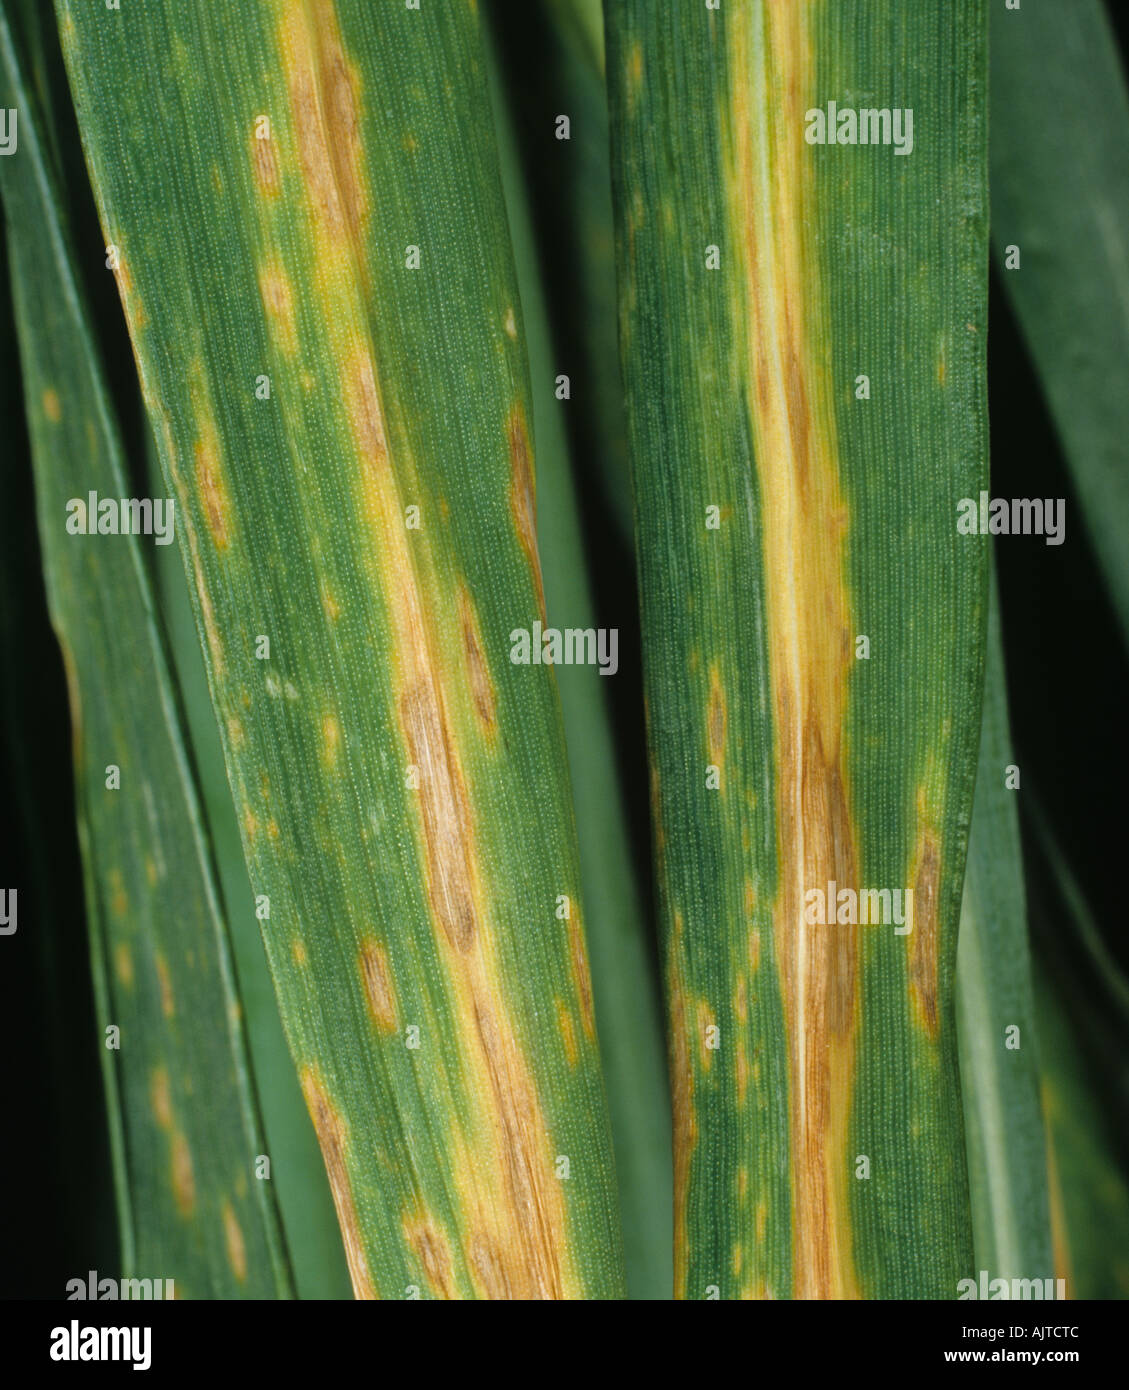 Septoria leaf spot (Phaeosphaeria nodorum) lesions on wheat leaves Stock Photo